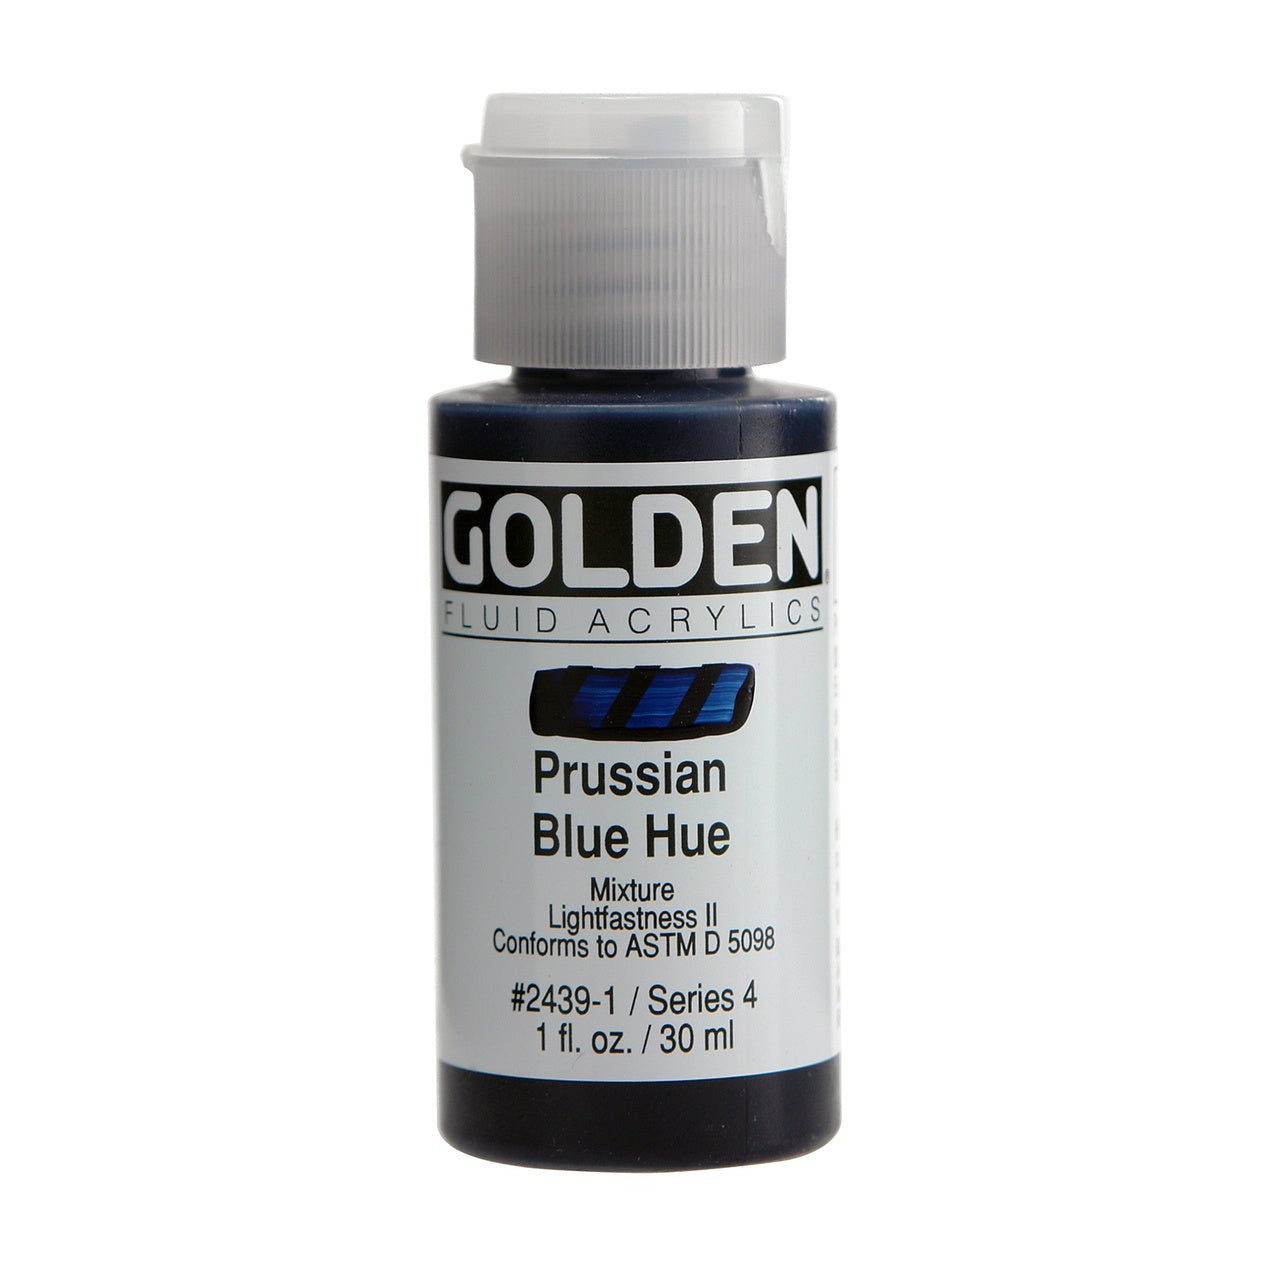 Golden Fluid Acrylic Prussian Blue Hue 1 oz - merriartist.com